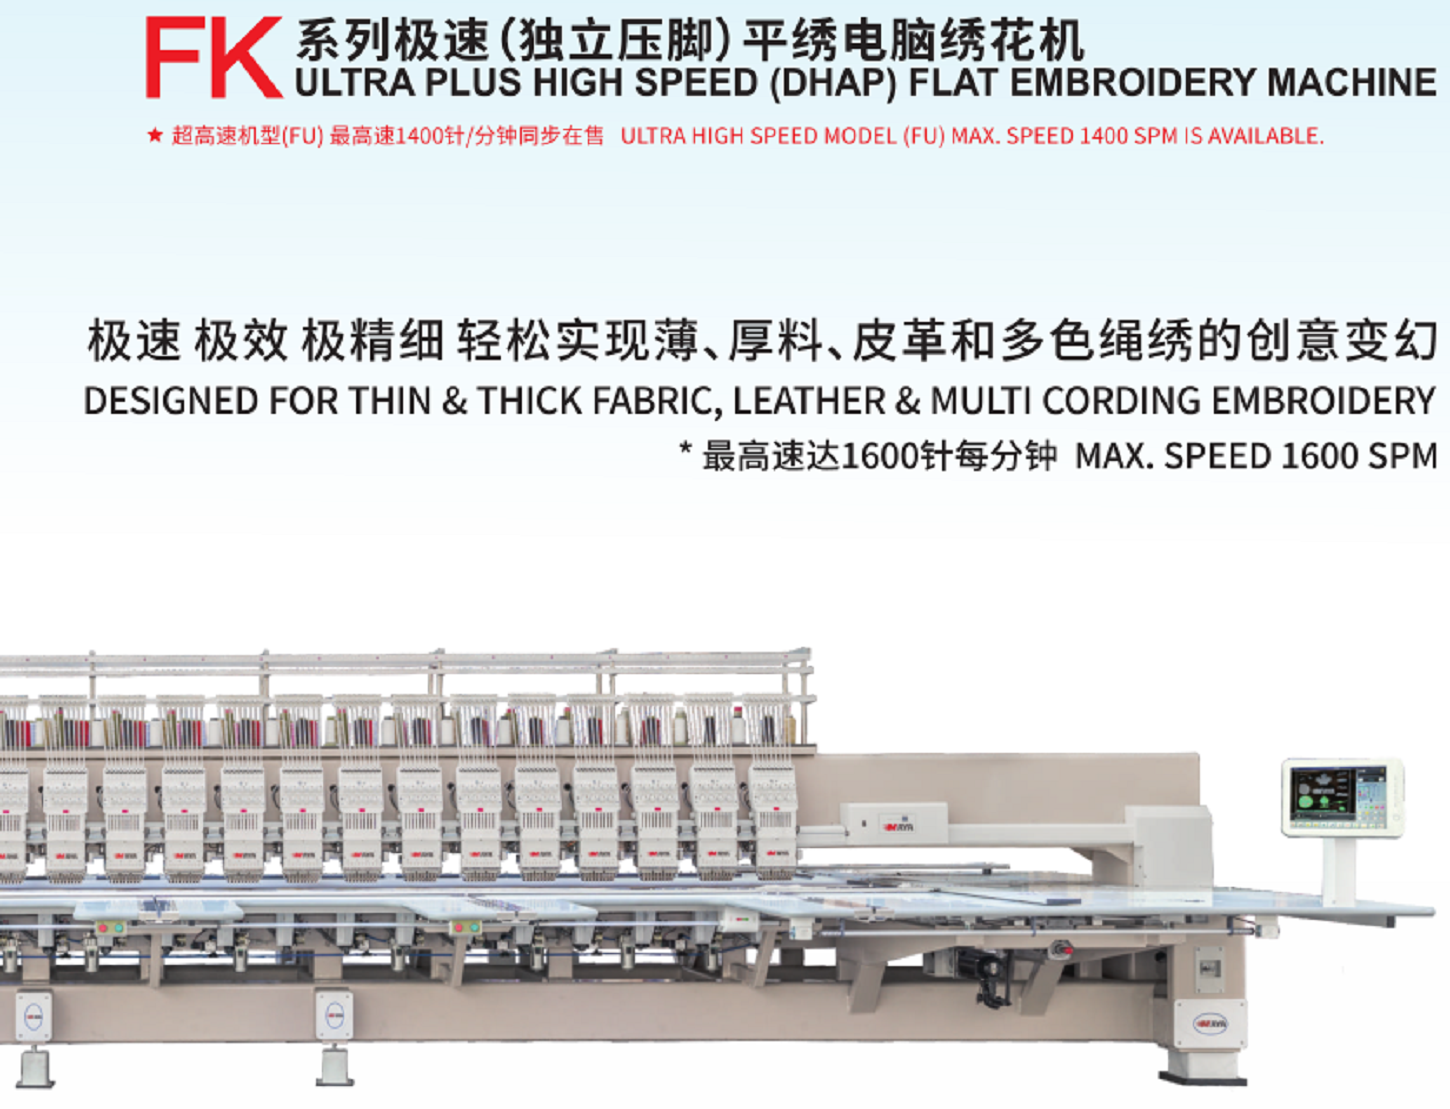 FK-923首页-中文产品说明PDF75截图1450x.png